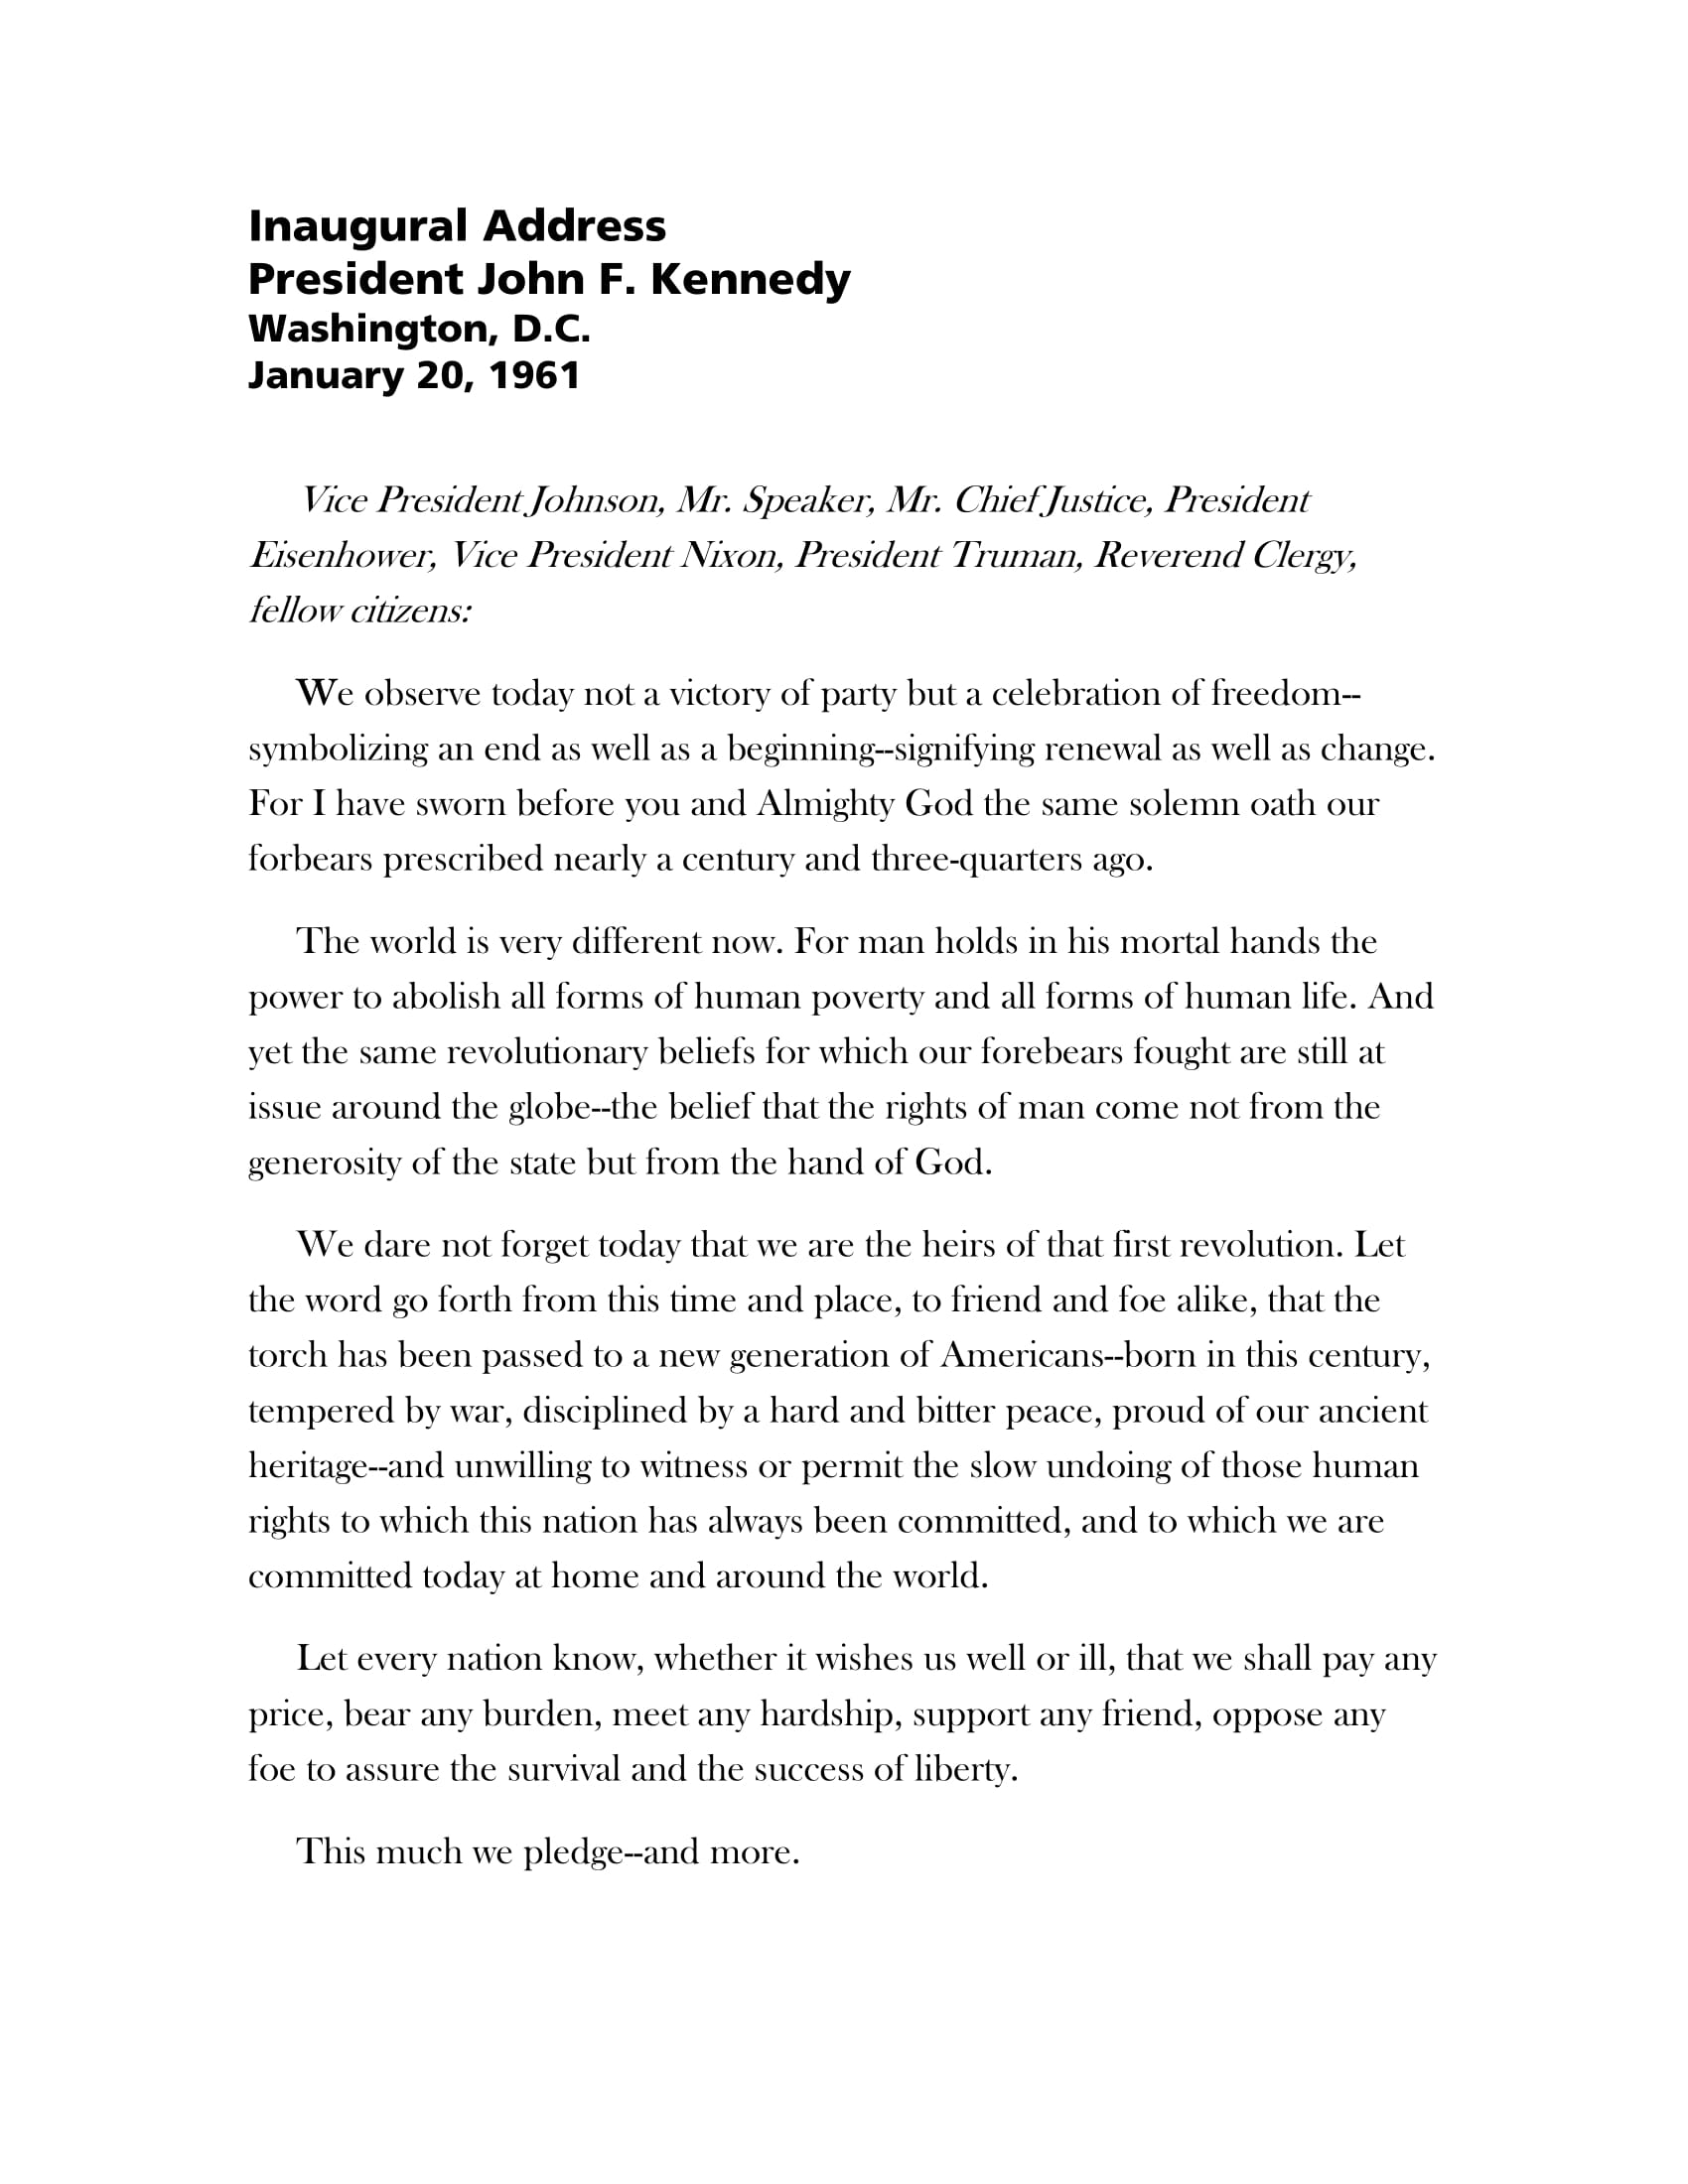 JFK Inaugural Address Example